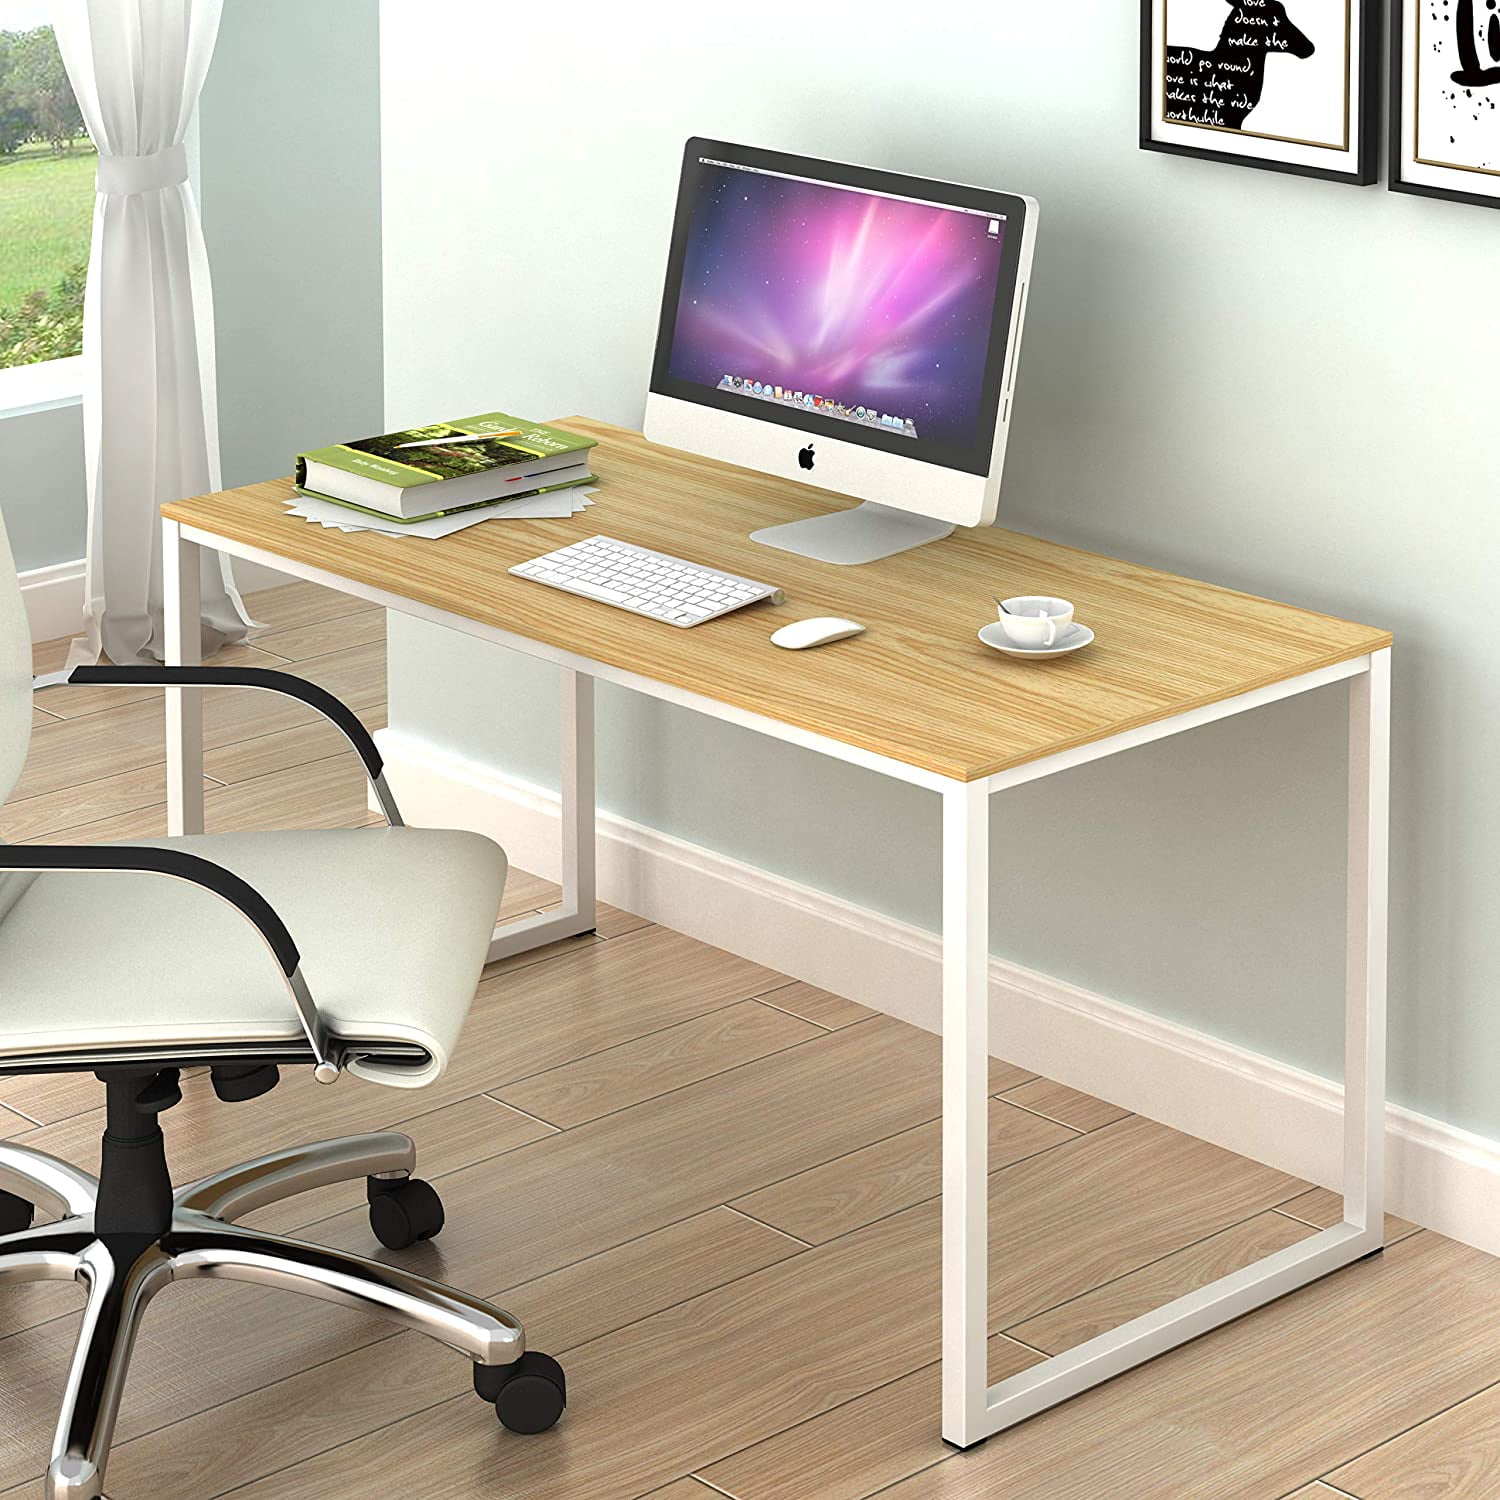 SHW Home Office 48-Inch Computer Desk, White/Oak - Walmart.com